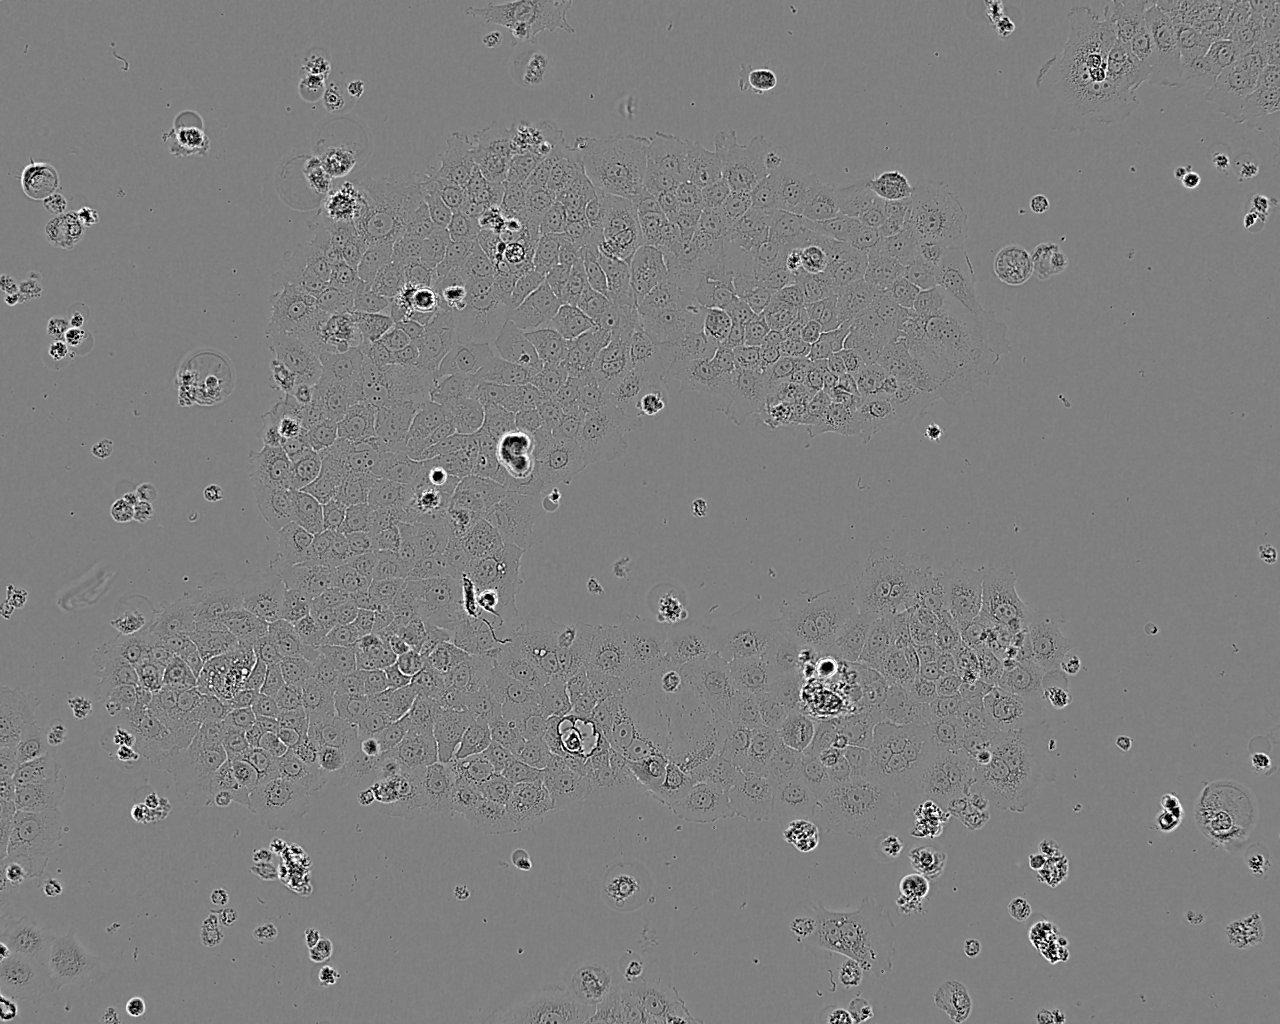 MeWo epithelioid cells人恶性黑色素瘤细胞系